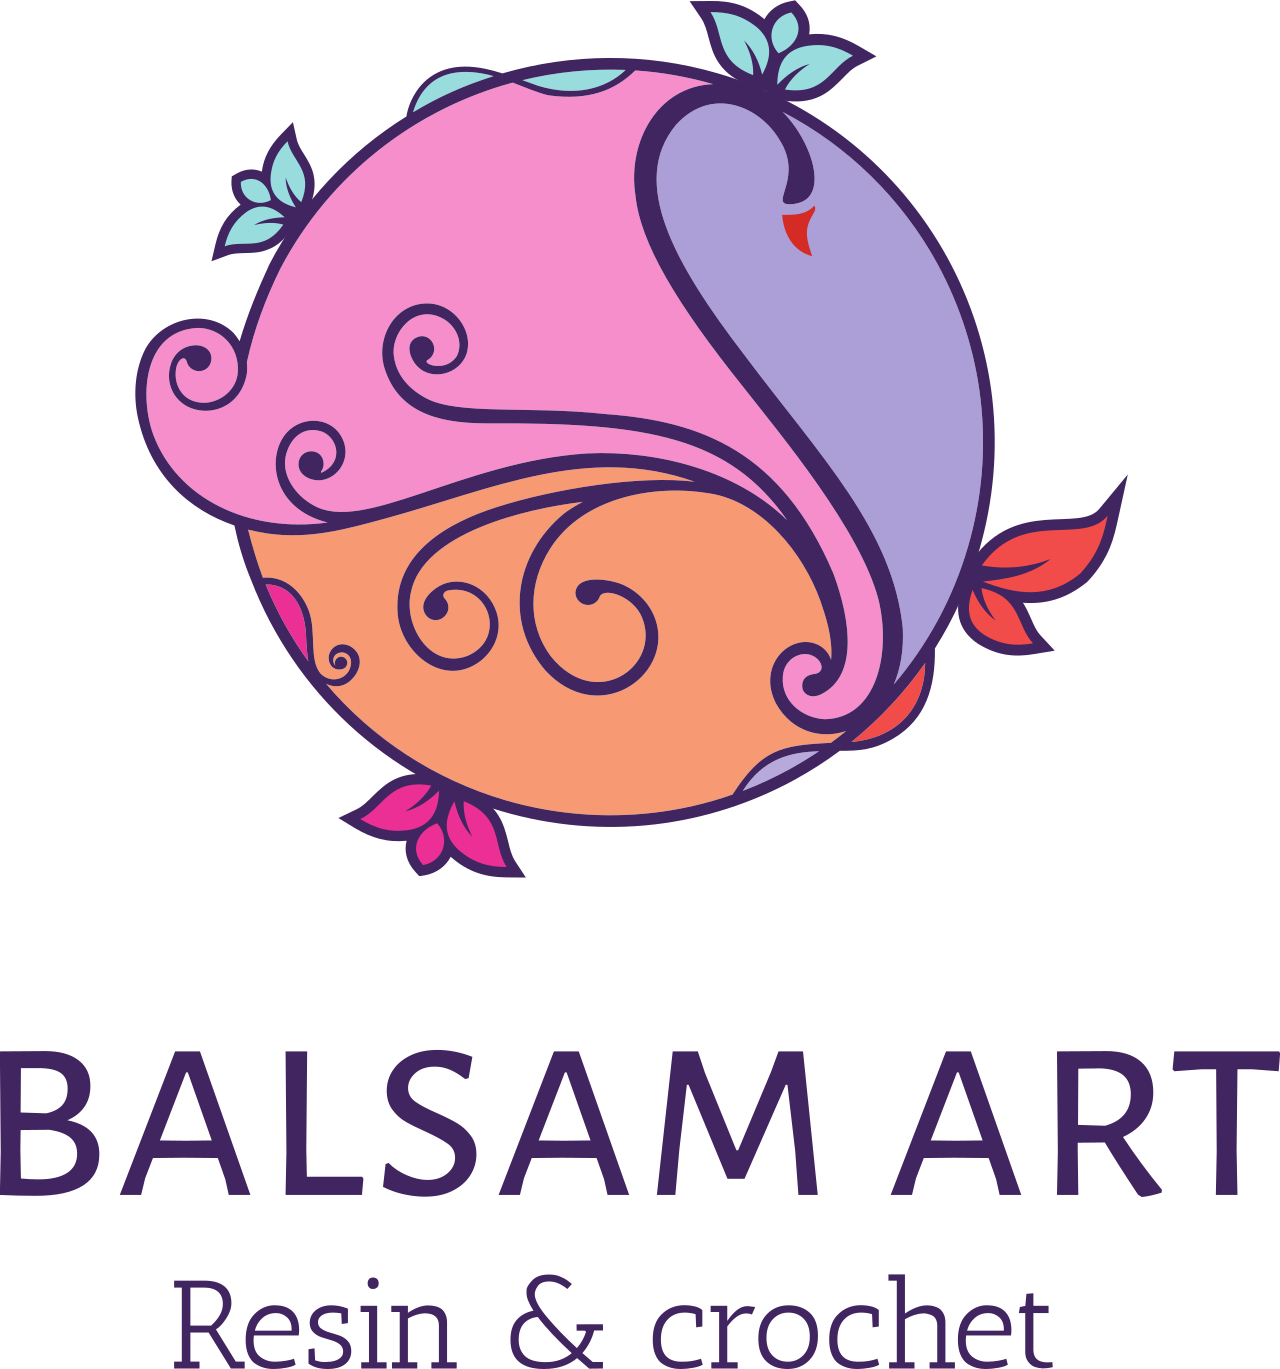 balsam art's logo